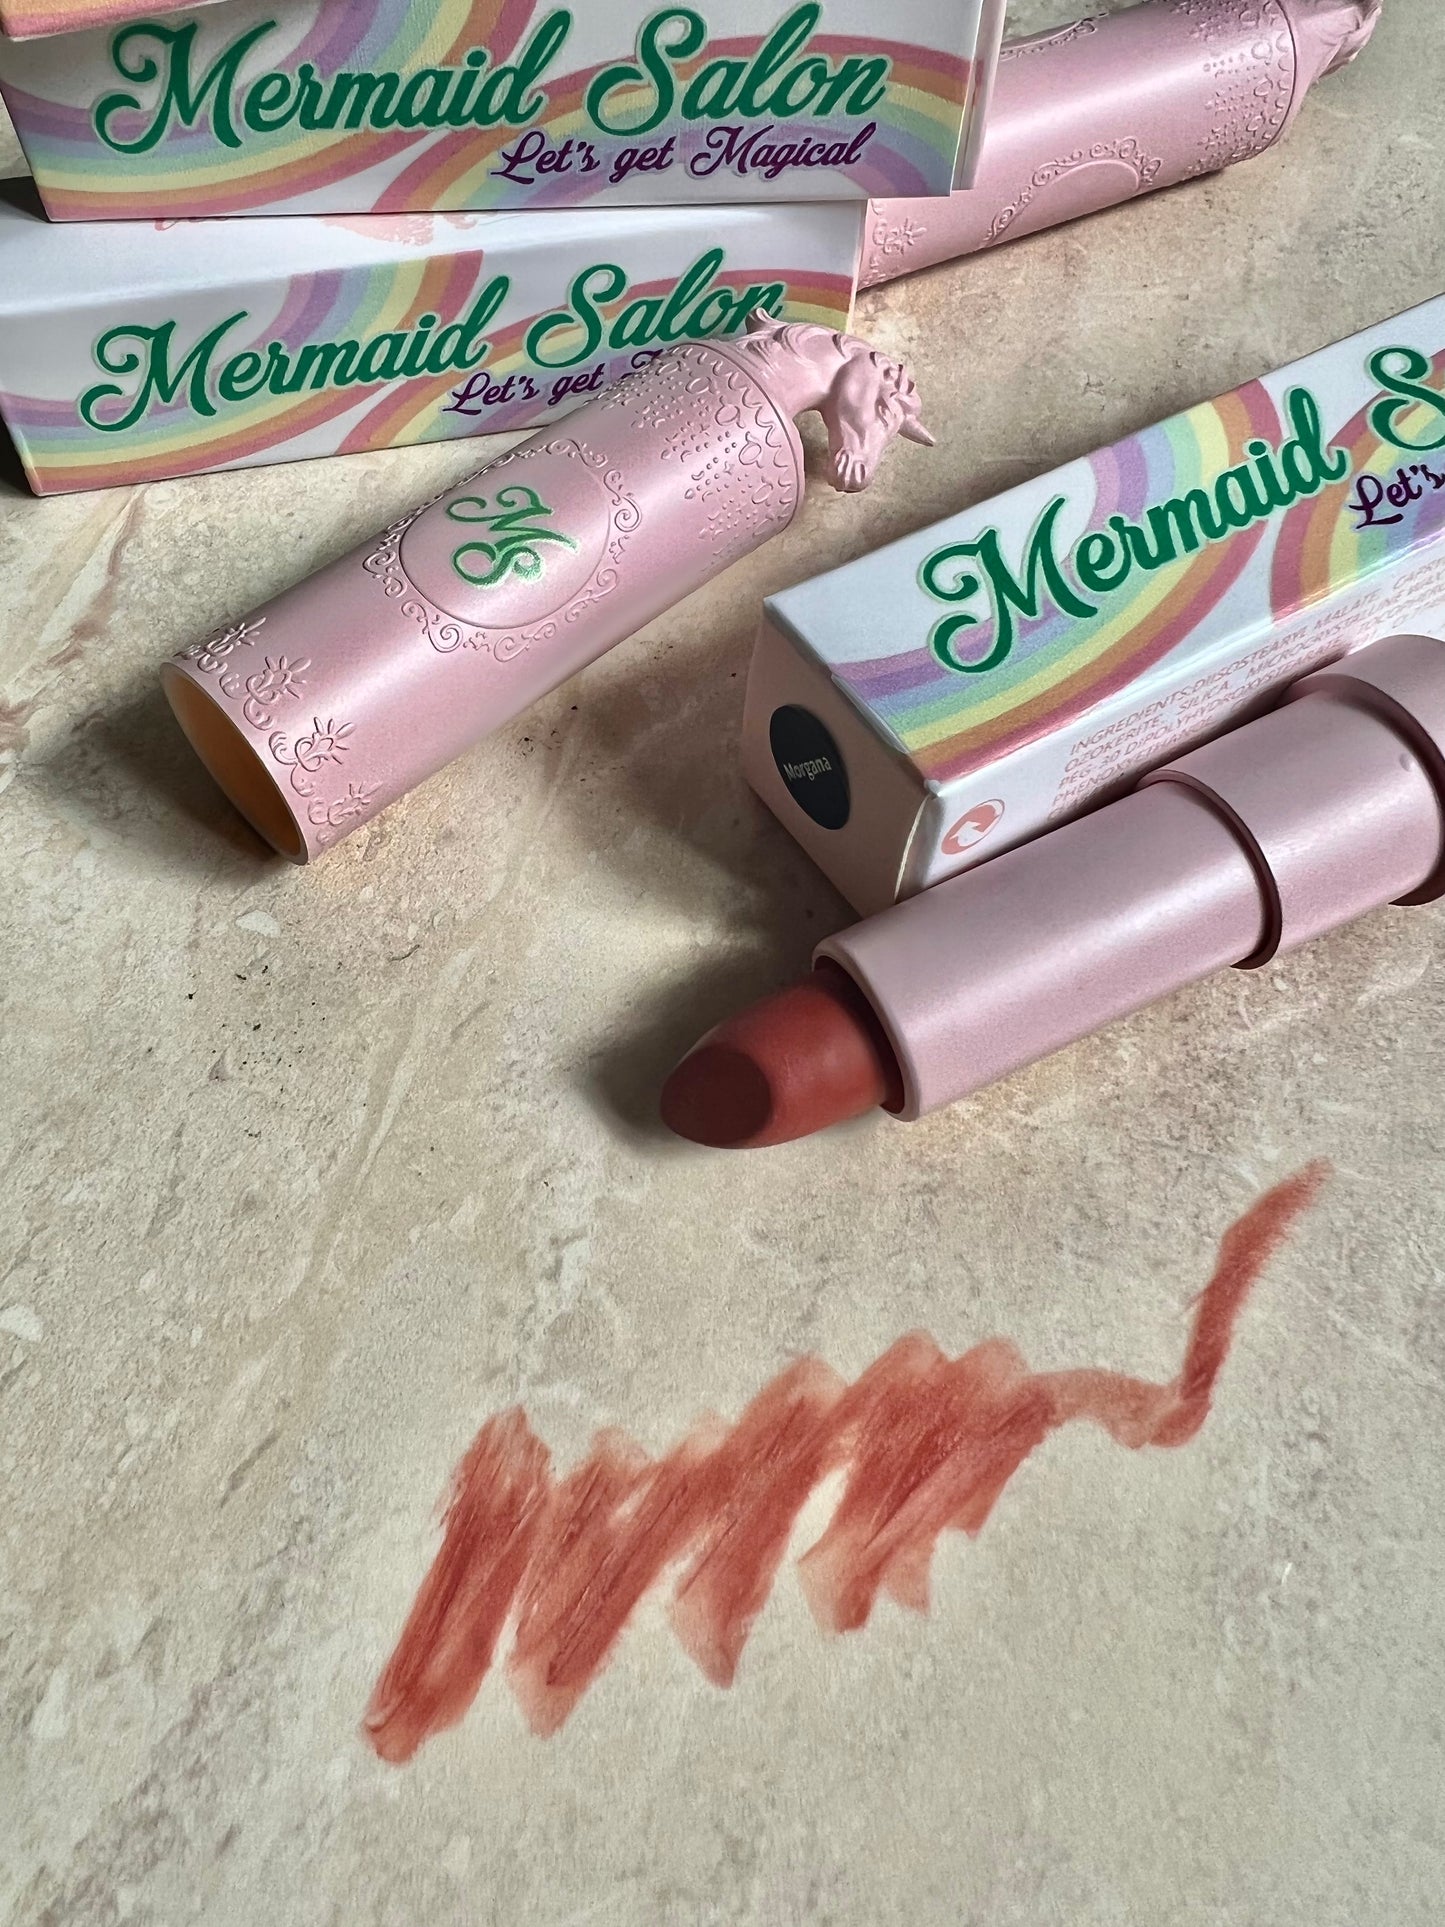 MORGANA - Traditional Cream Velvet lipstick